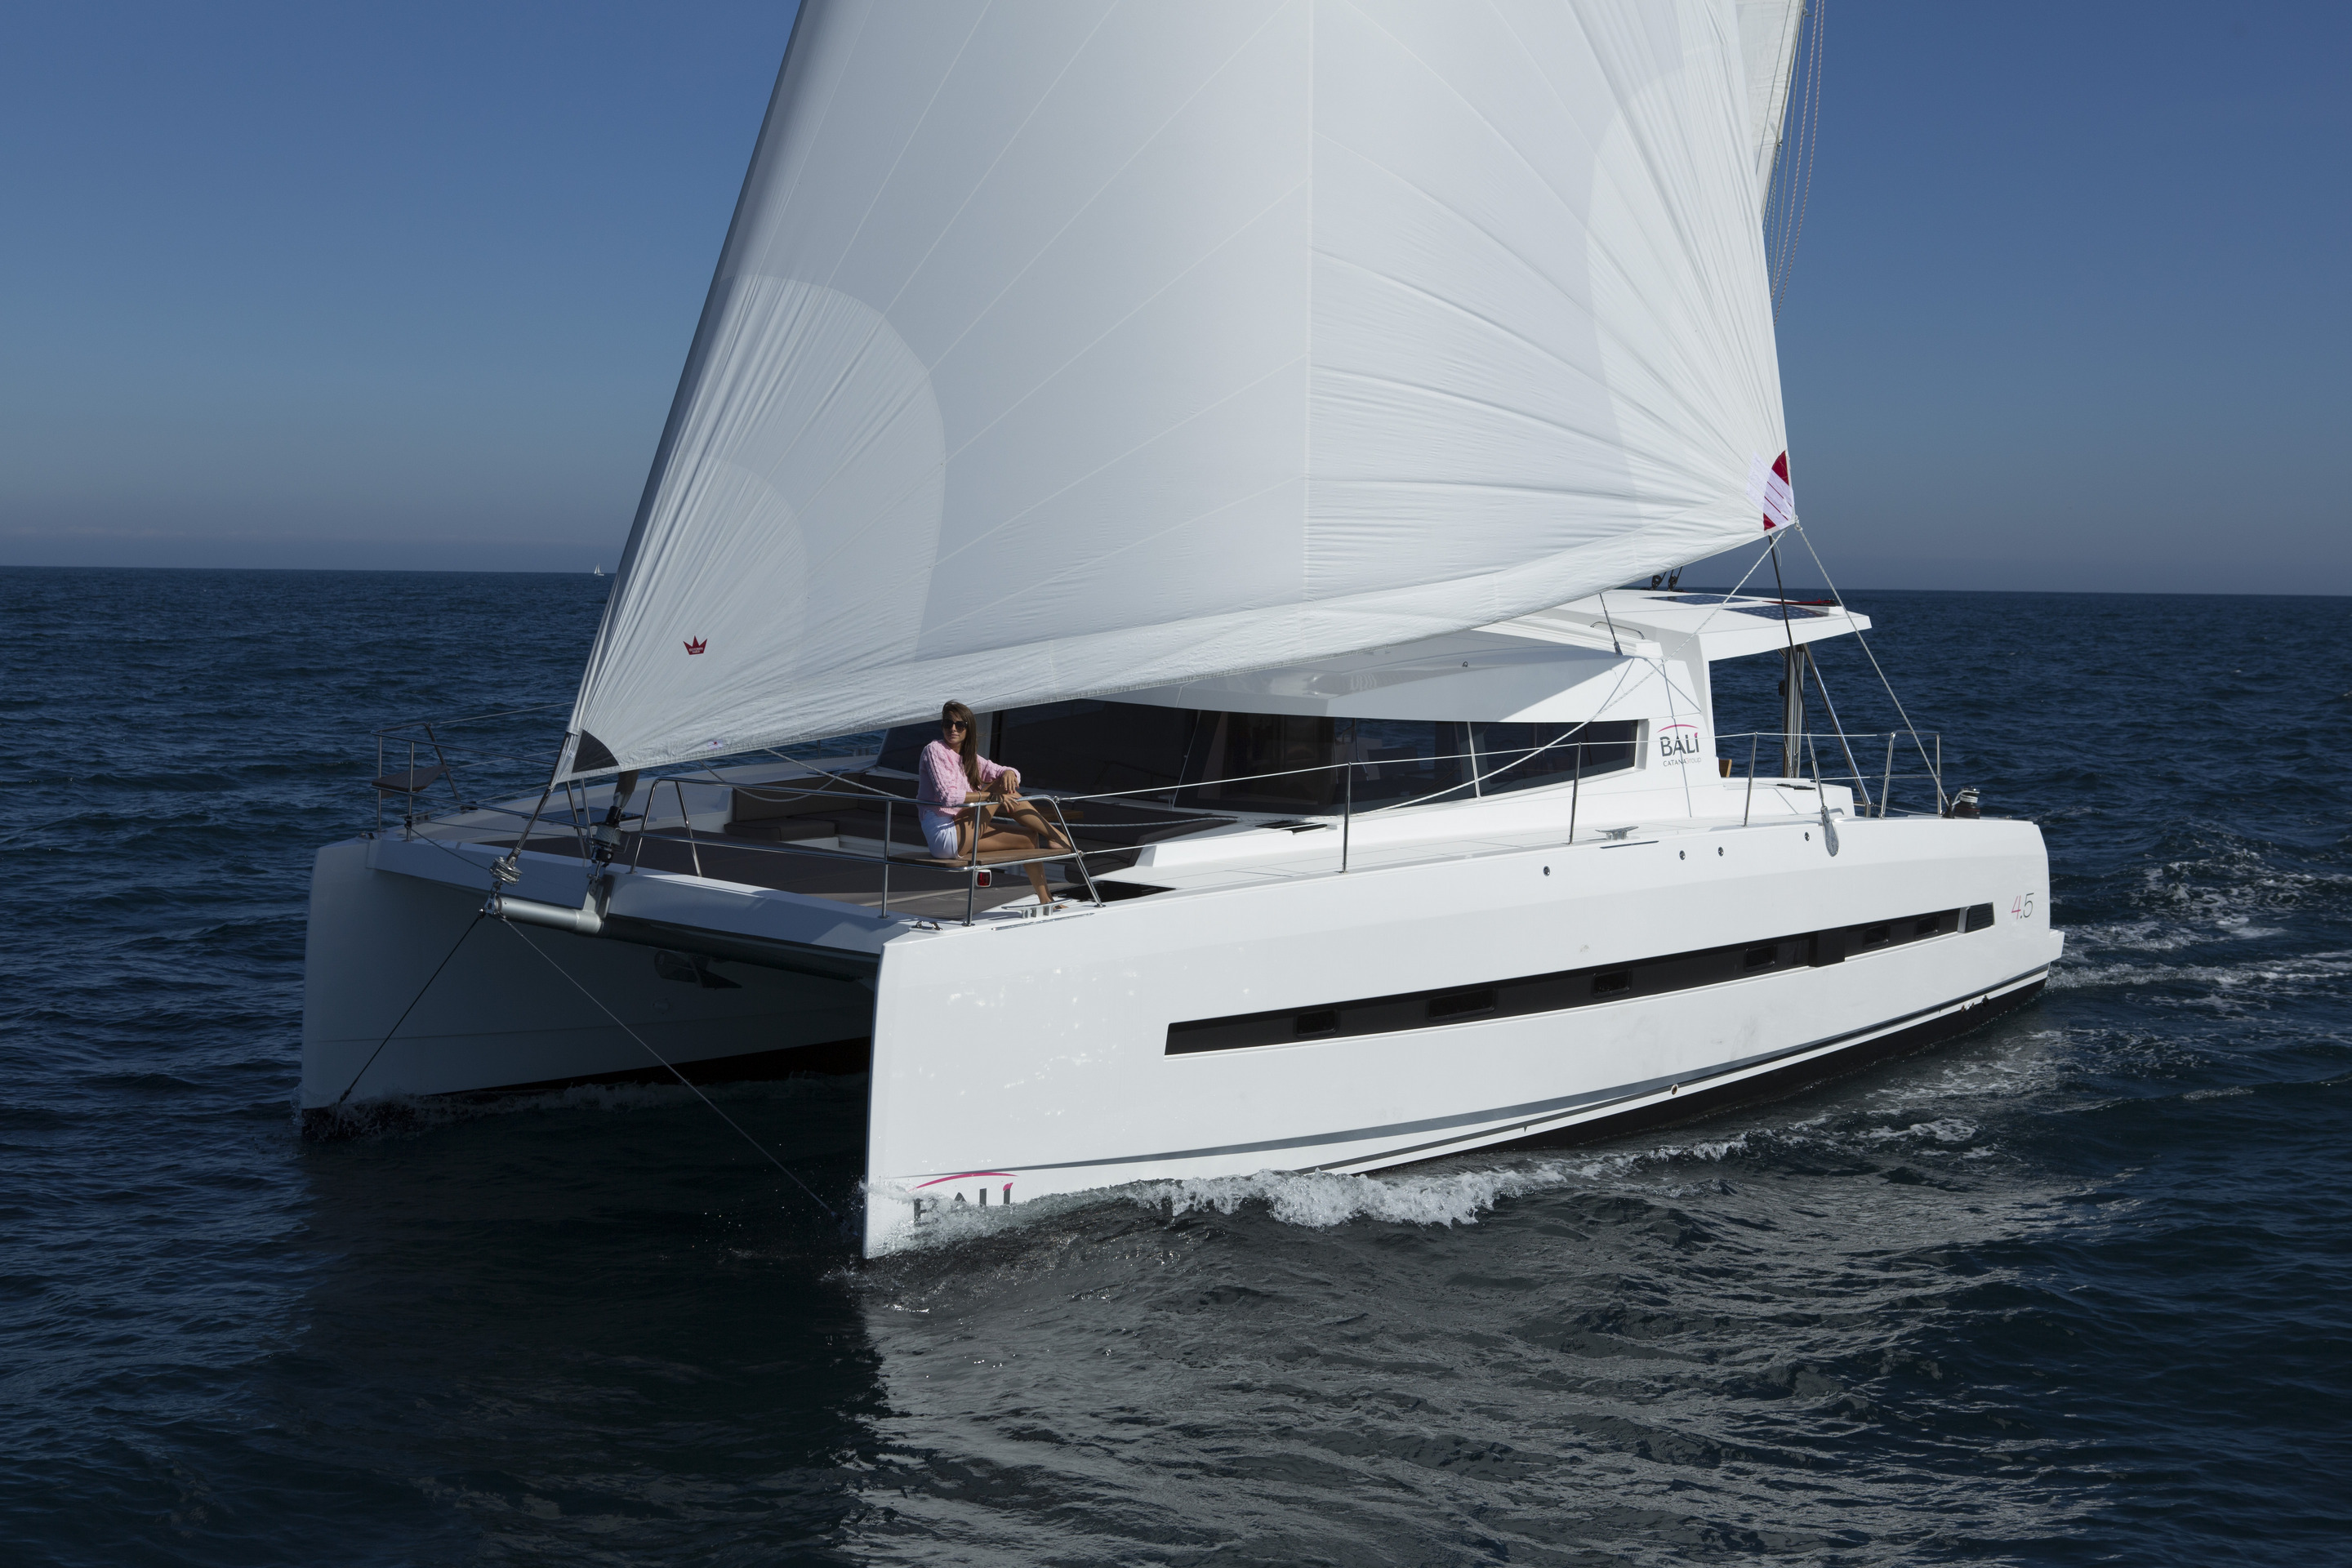 Catamaran FOR CHARTER, year 2018 brand Bali Catamaran and model 4.5, available in Marina Port de Mallorca Palma Mallorca España